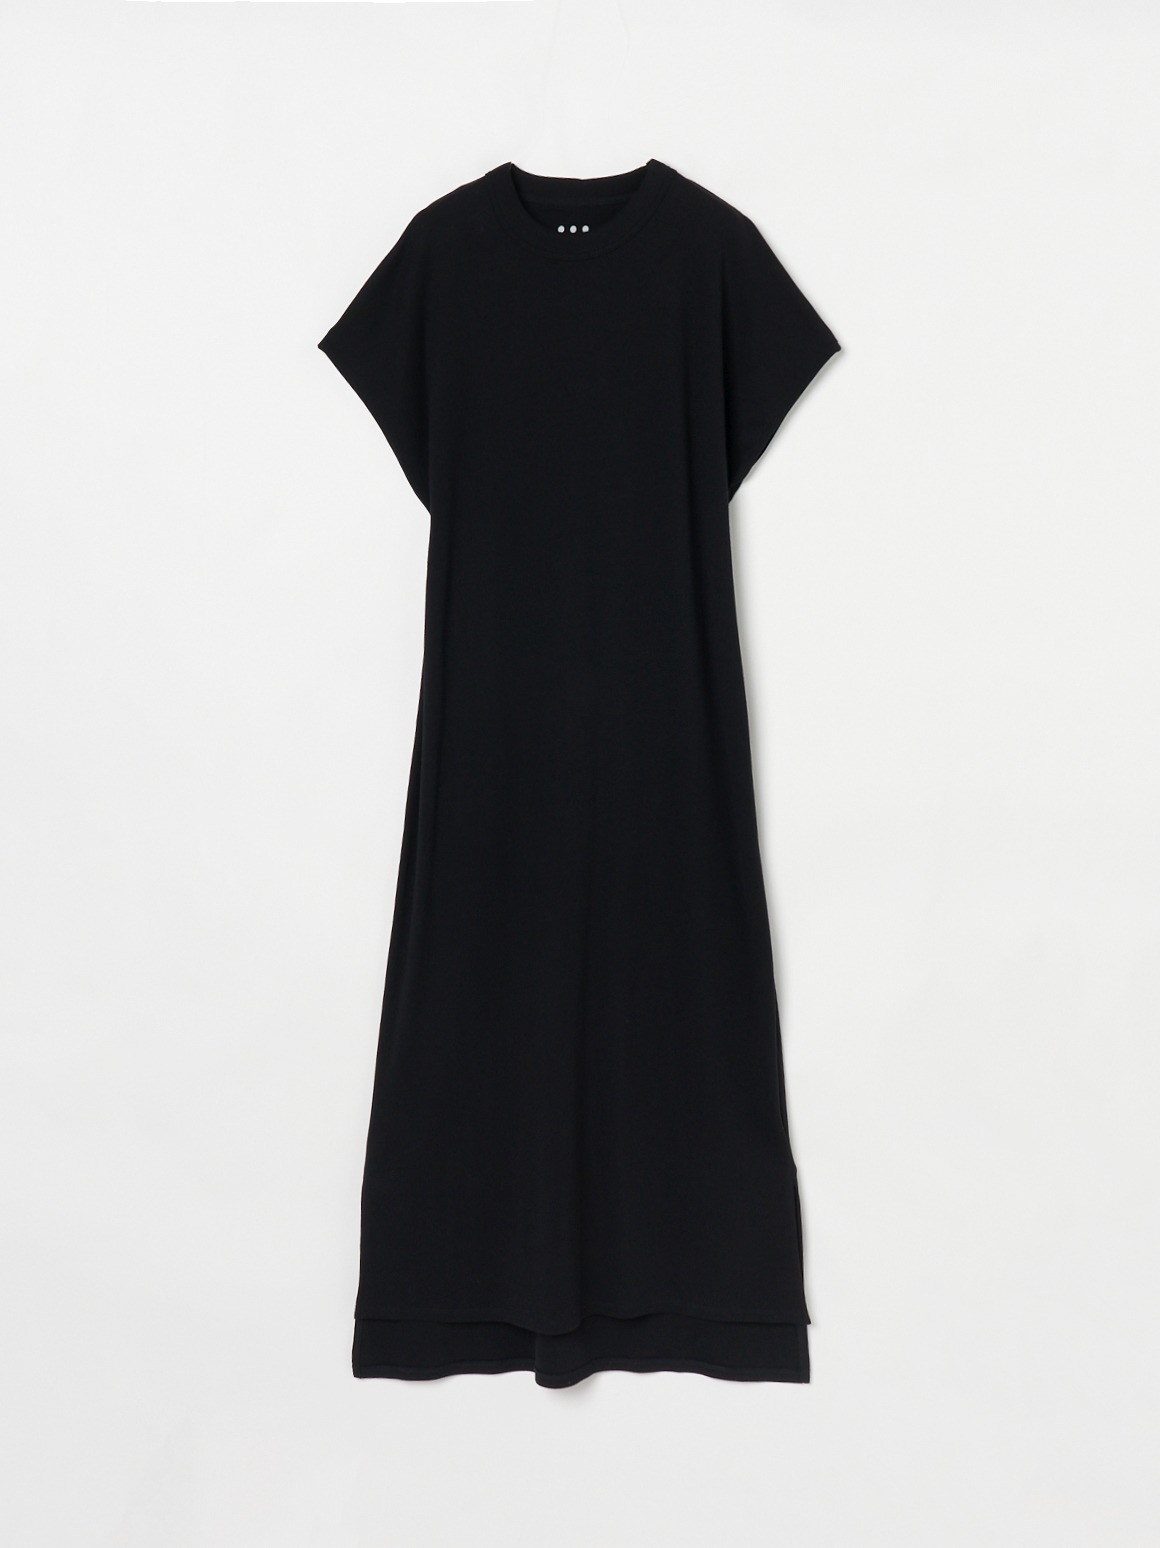 x RIKACO Organic cotton knit Tshirt dress 詳細画像 black 2